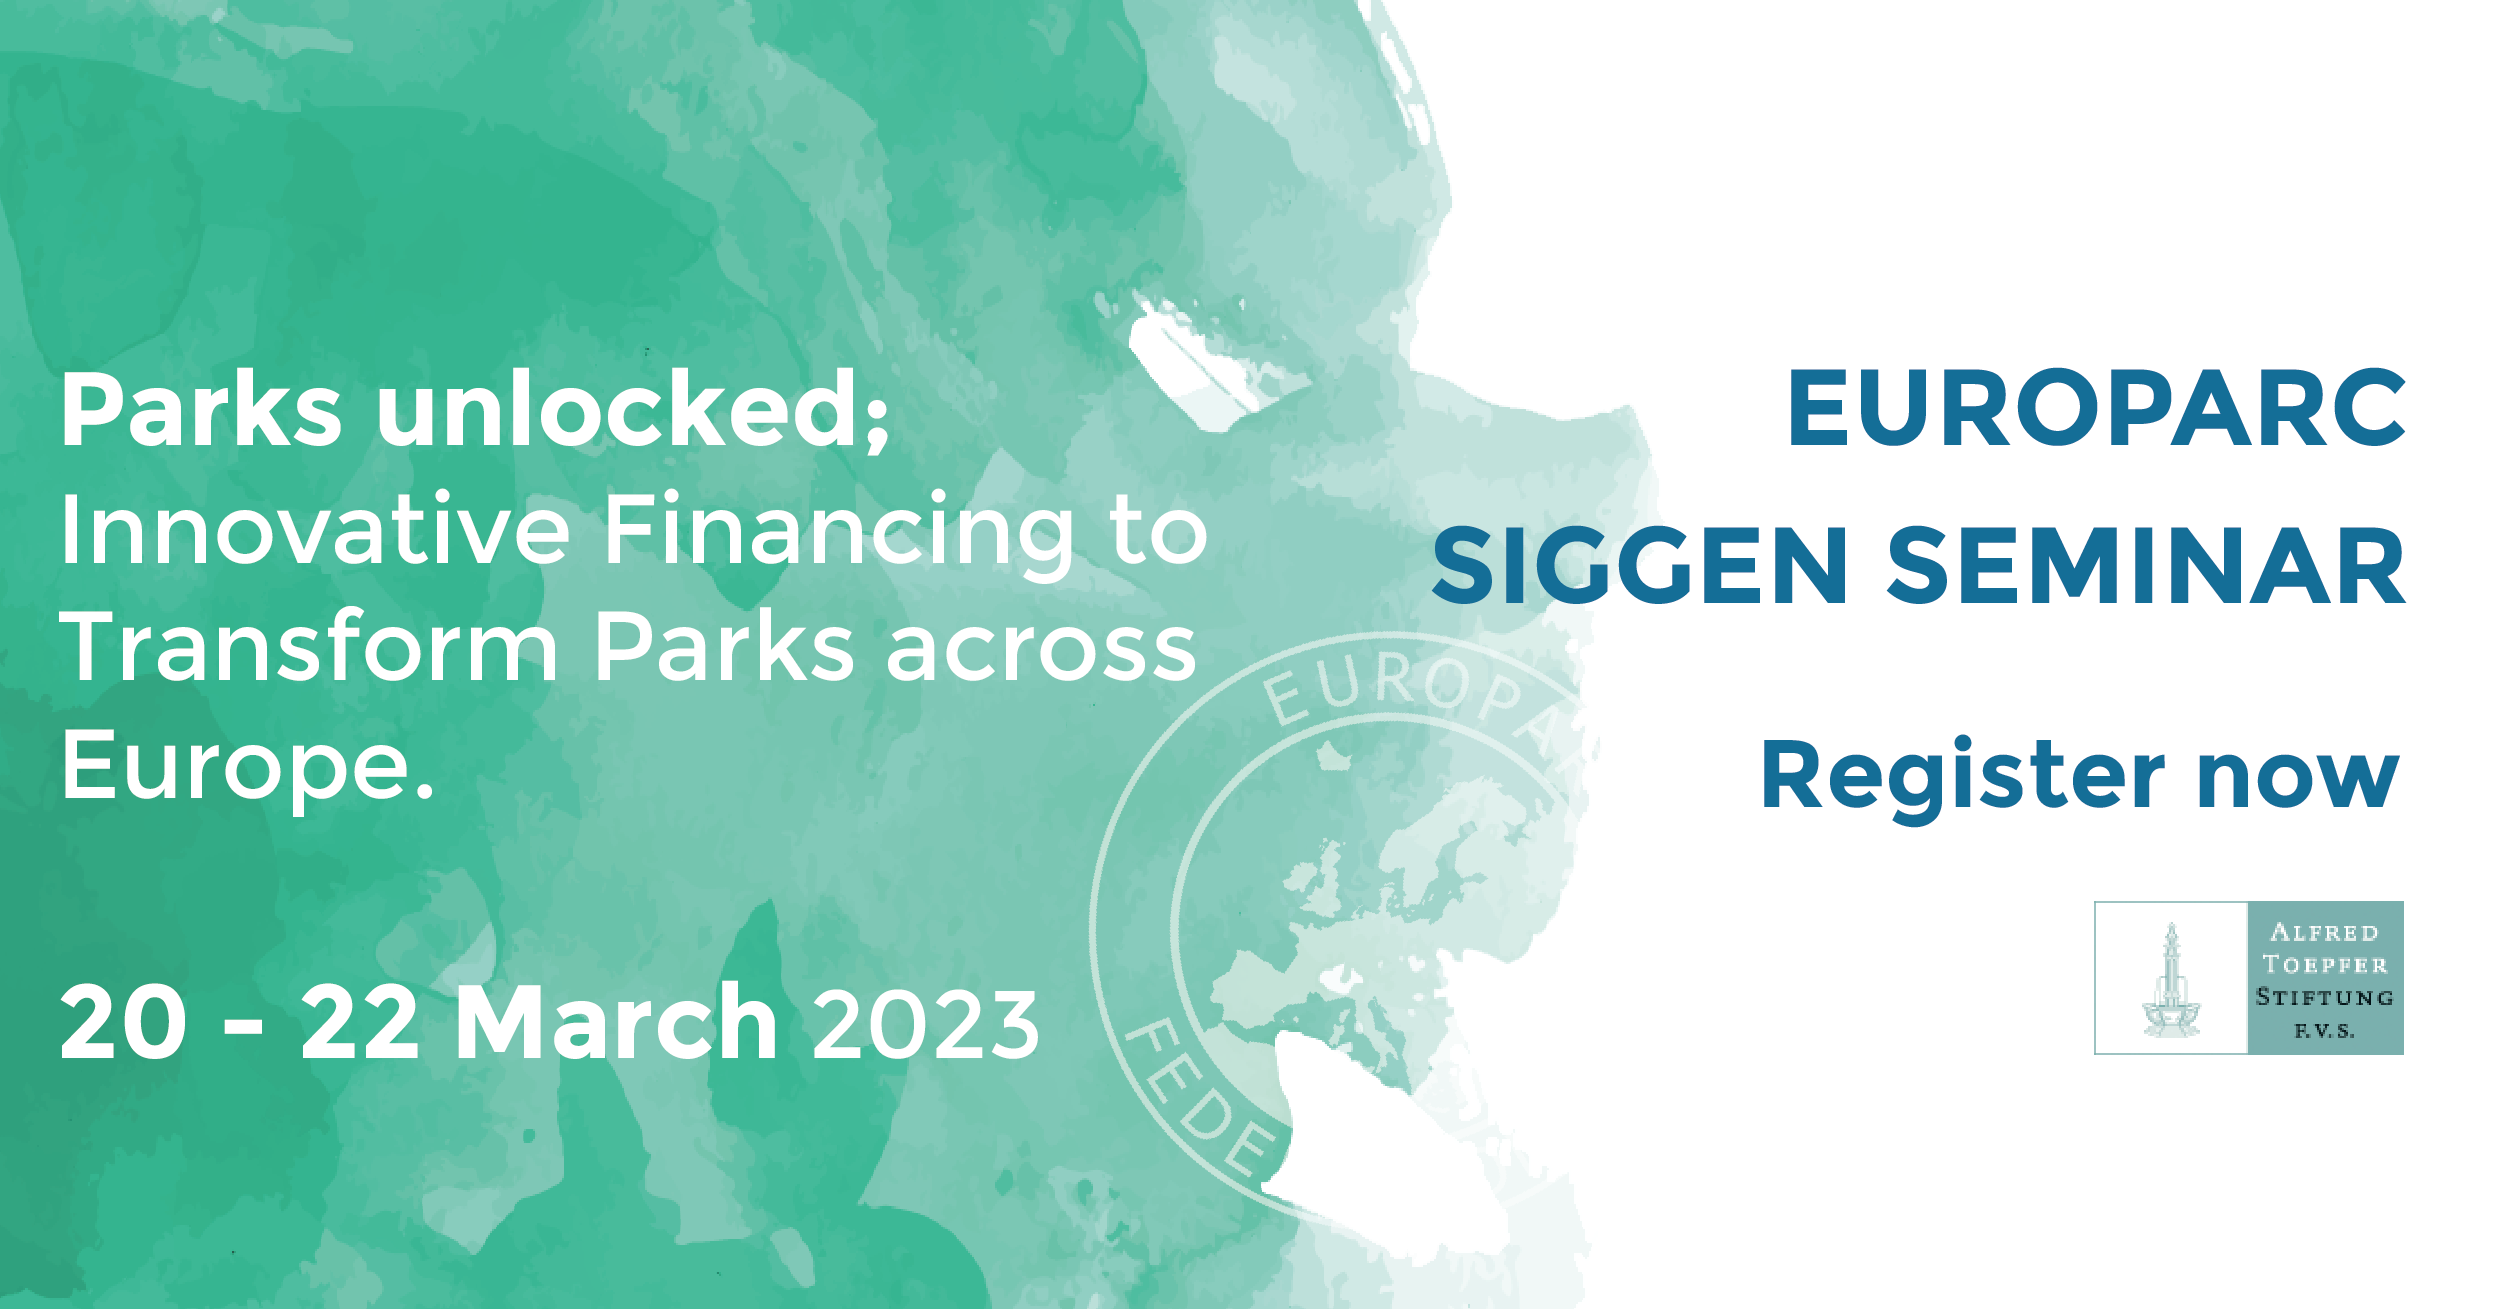 EUROPARC's Siggen Seminar 2023